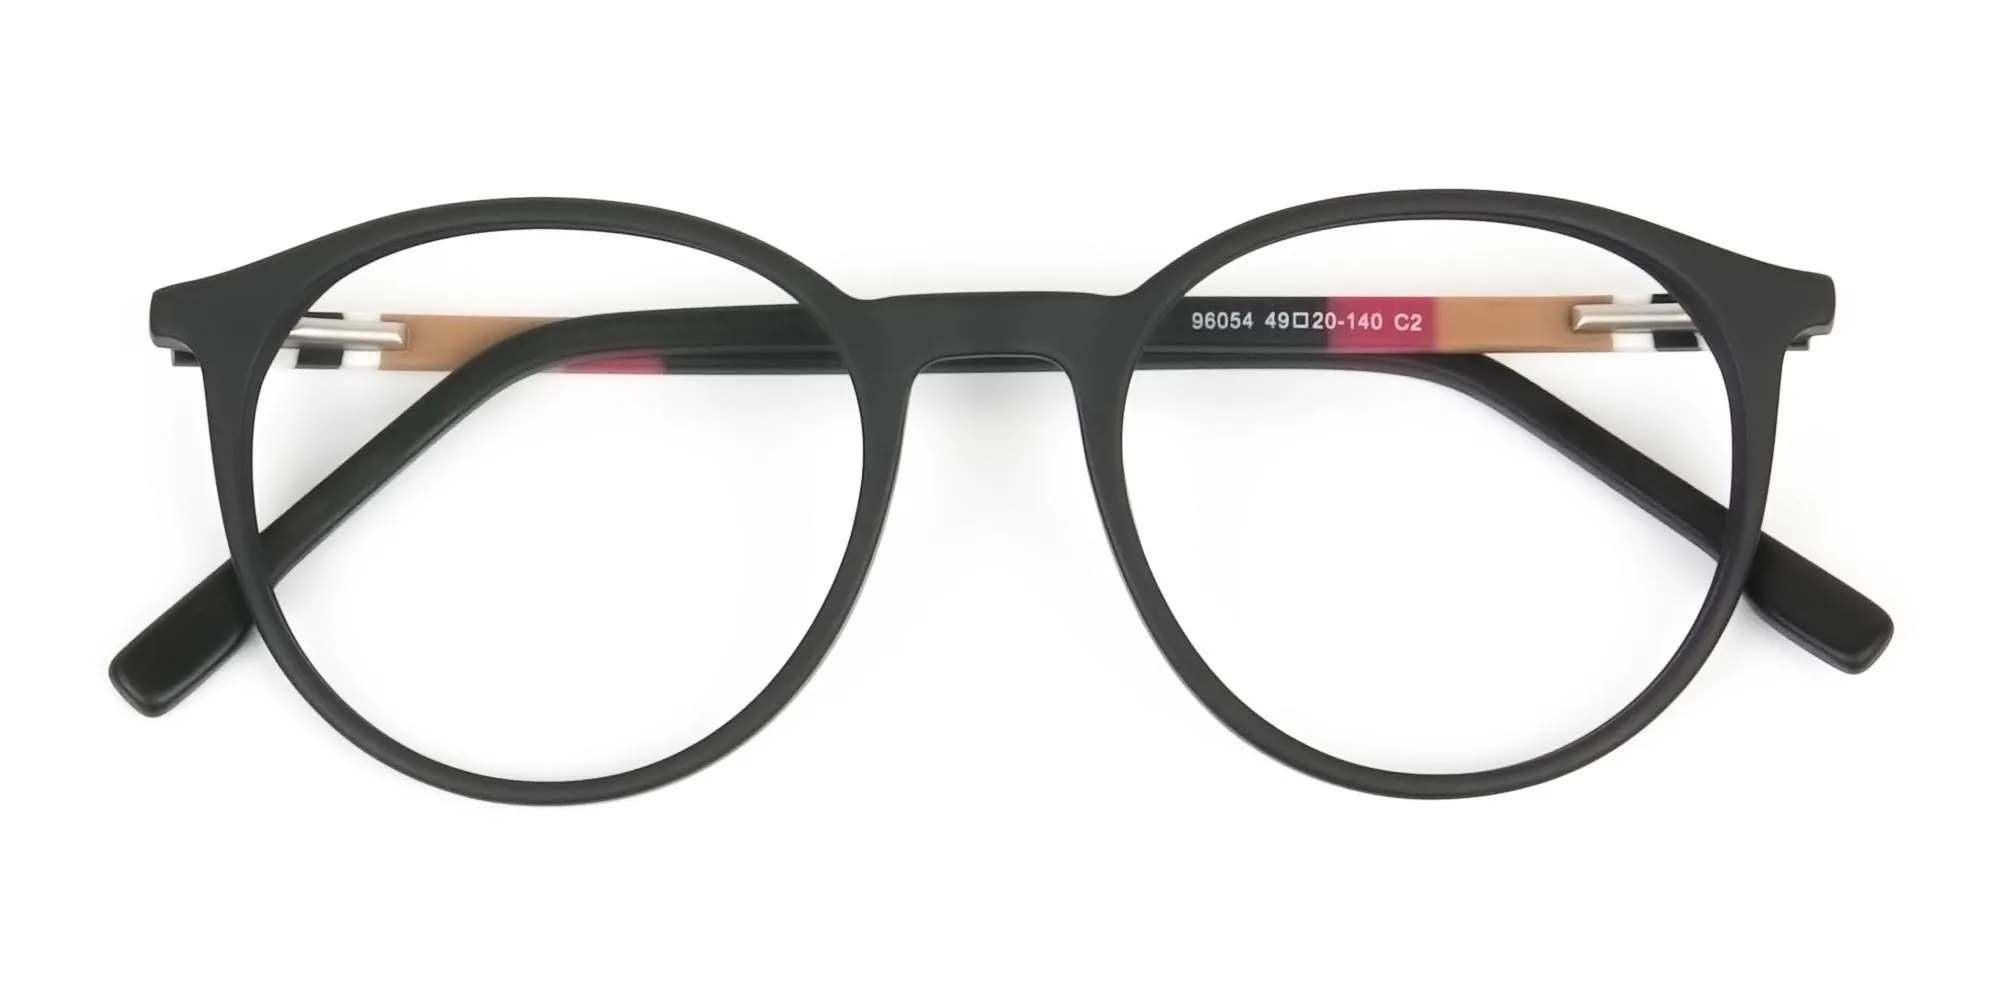 Designer Matte Black Acetate Eyeglasses in Round - 2